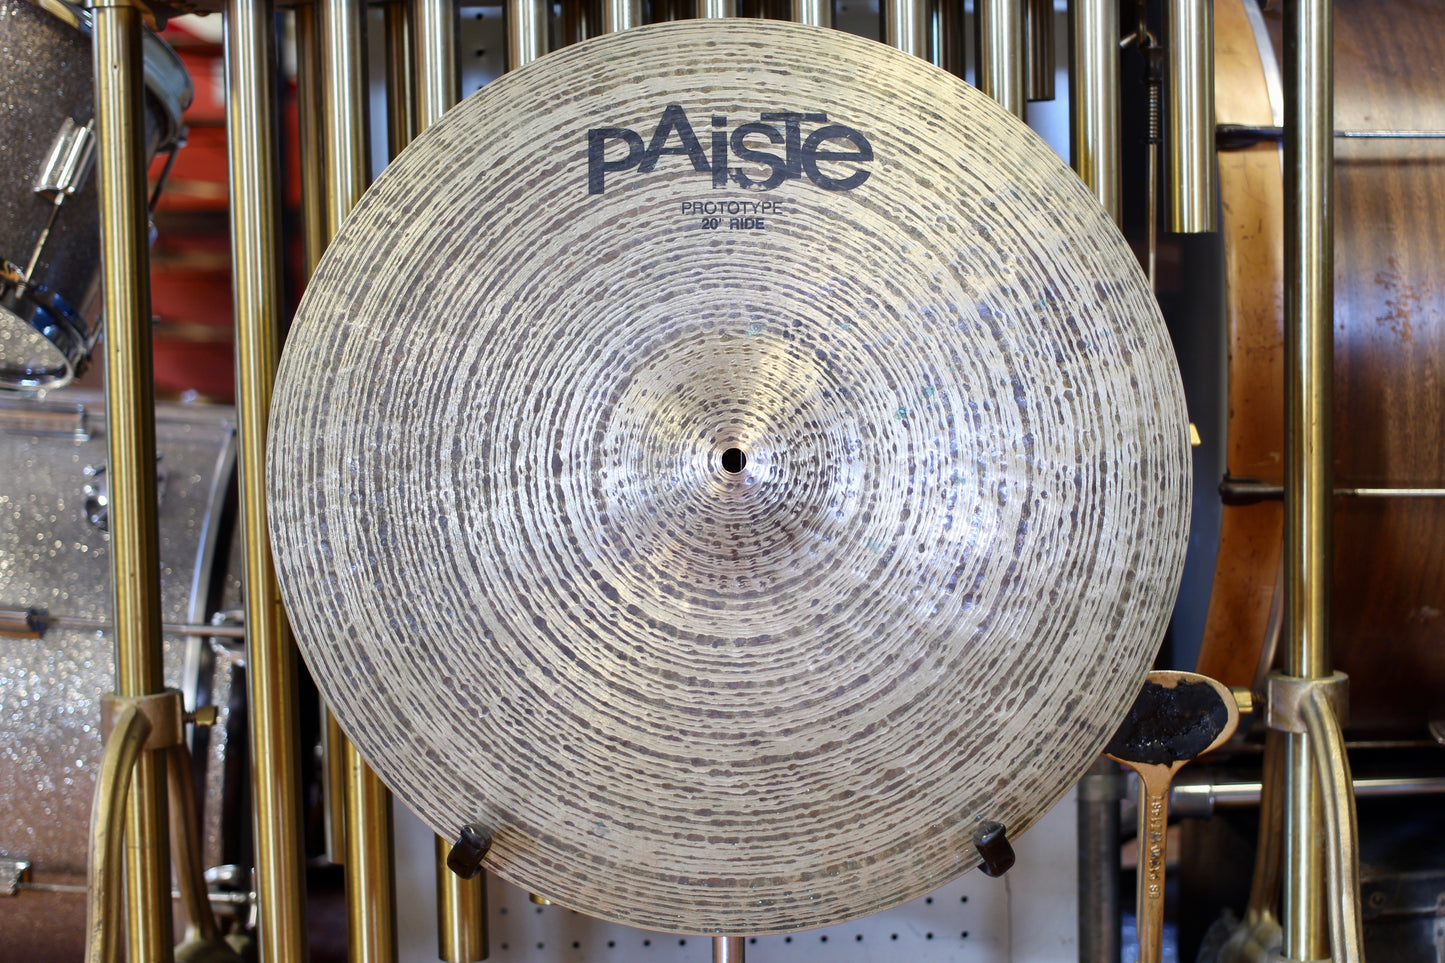 Used Paiste Prototype 20” Ride Cymbal 2680g